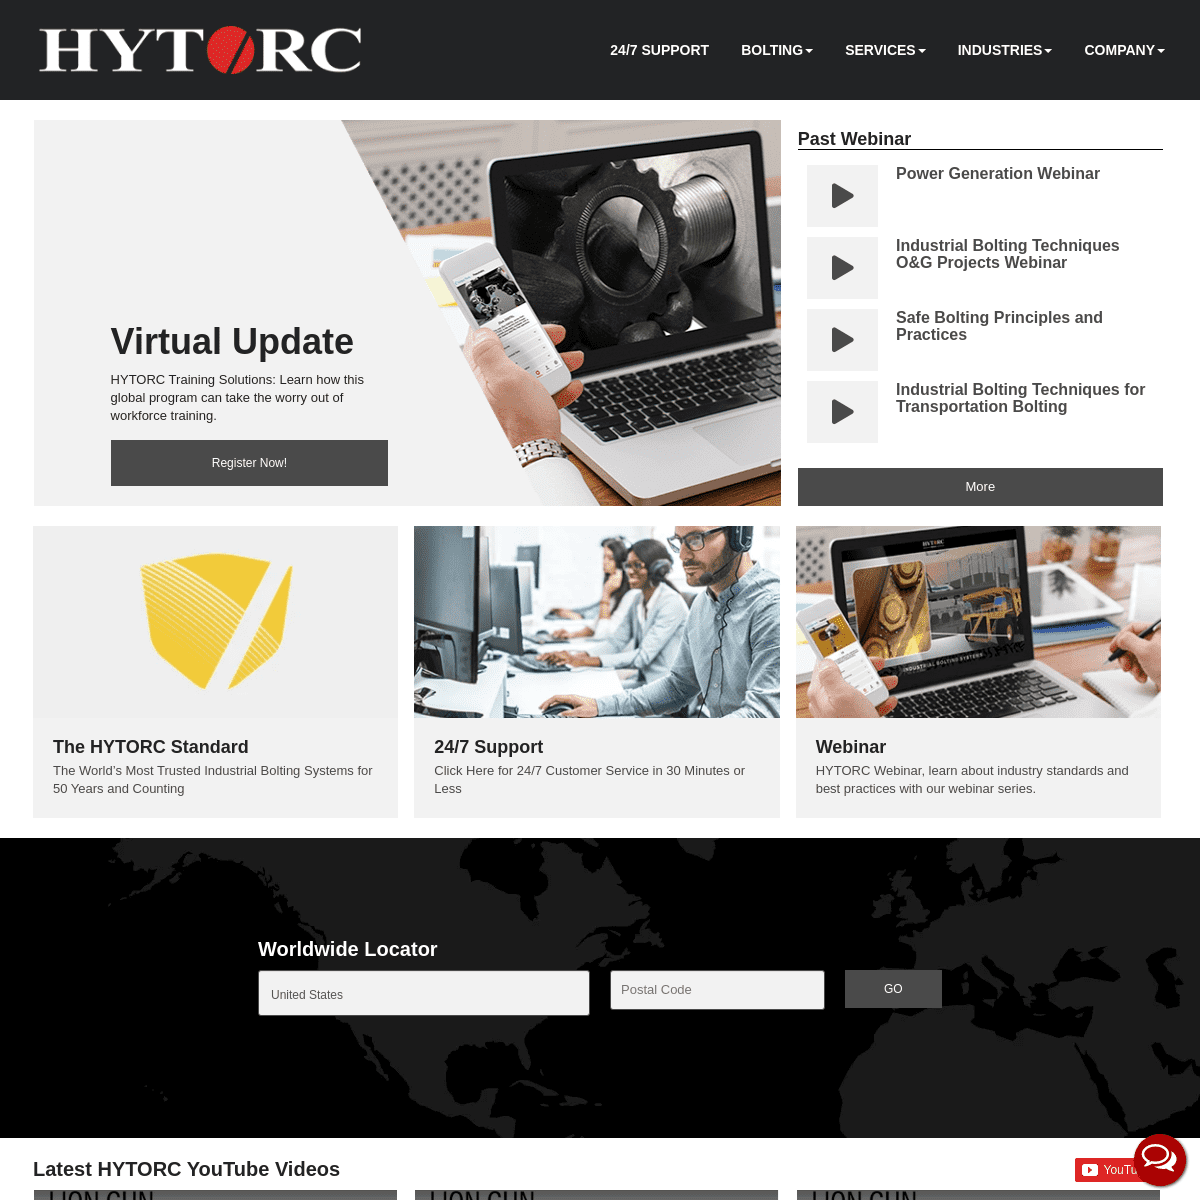 A complete backup of hytorc.com